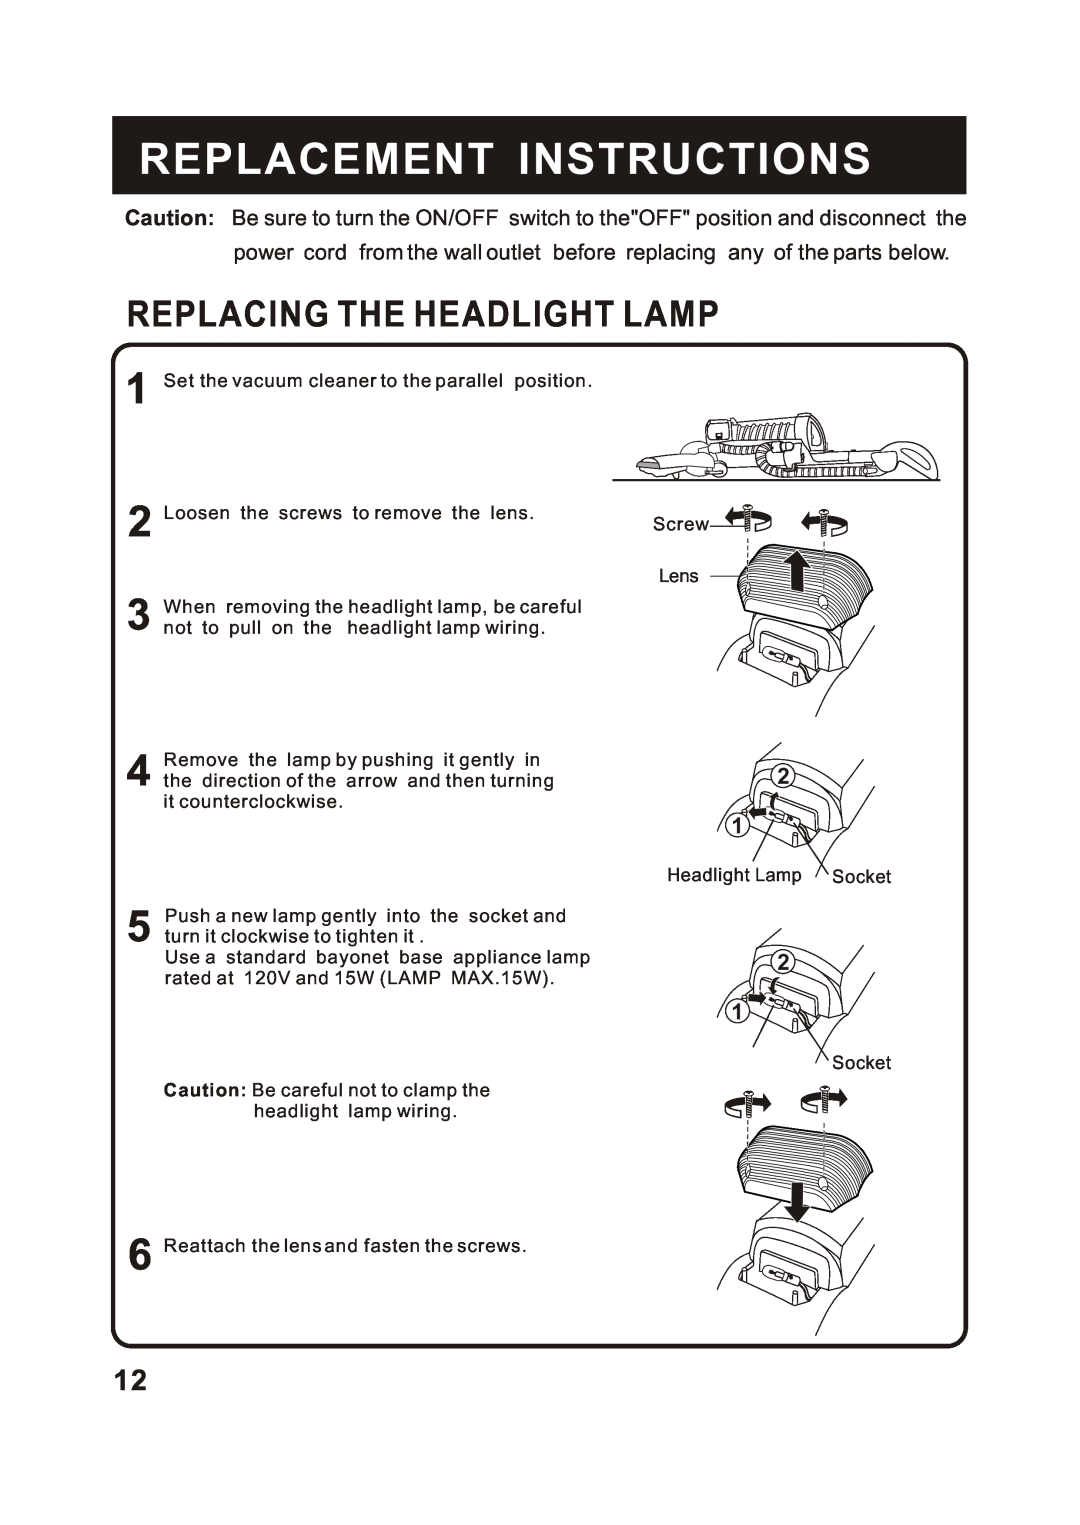 Fantom Vacuum FM742CS instruction manual Replacement Instructions, Replacing The Headlight Lamp 